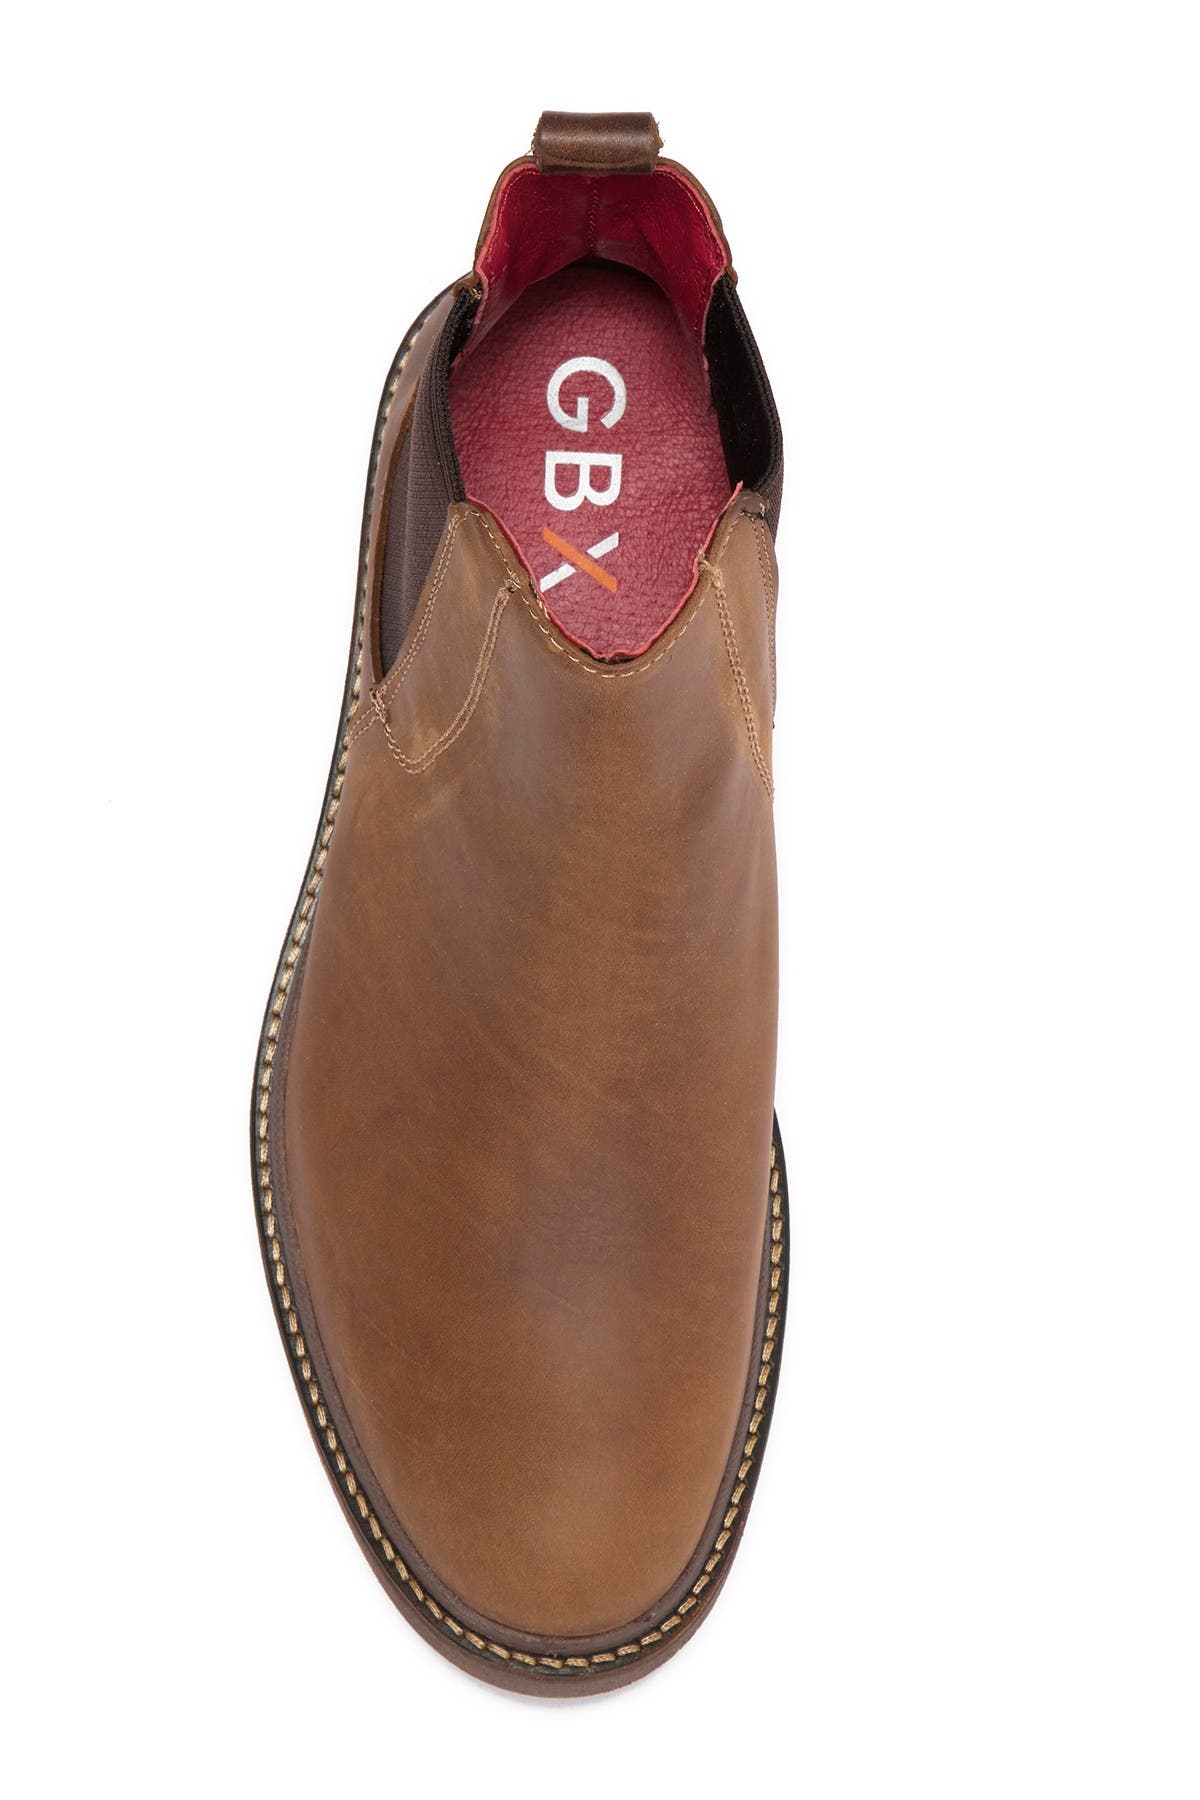 gbx chelsea boot